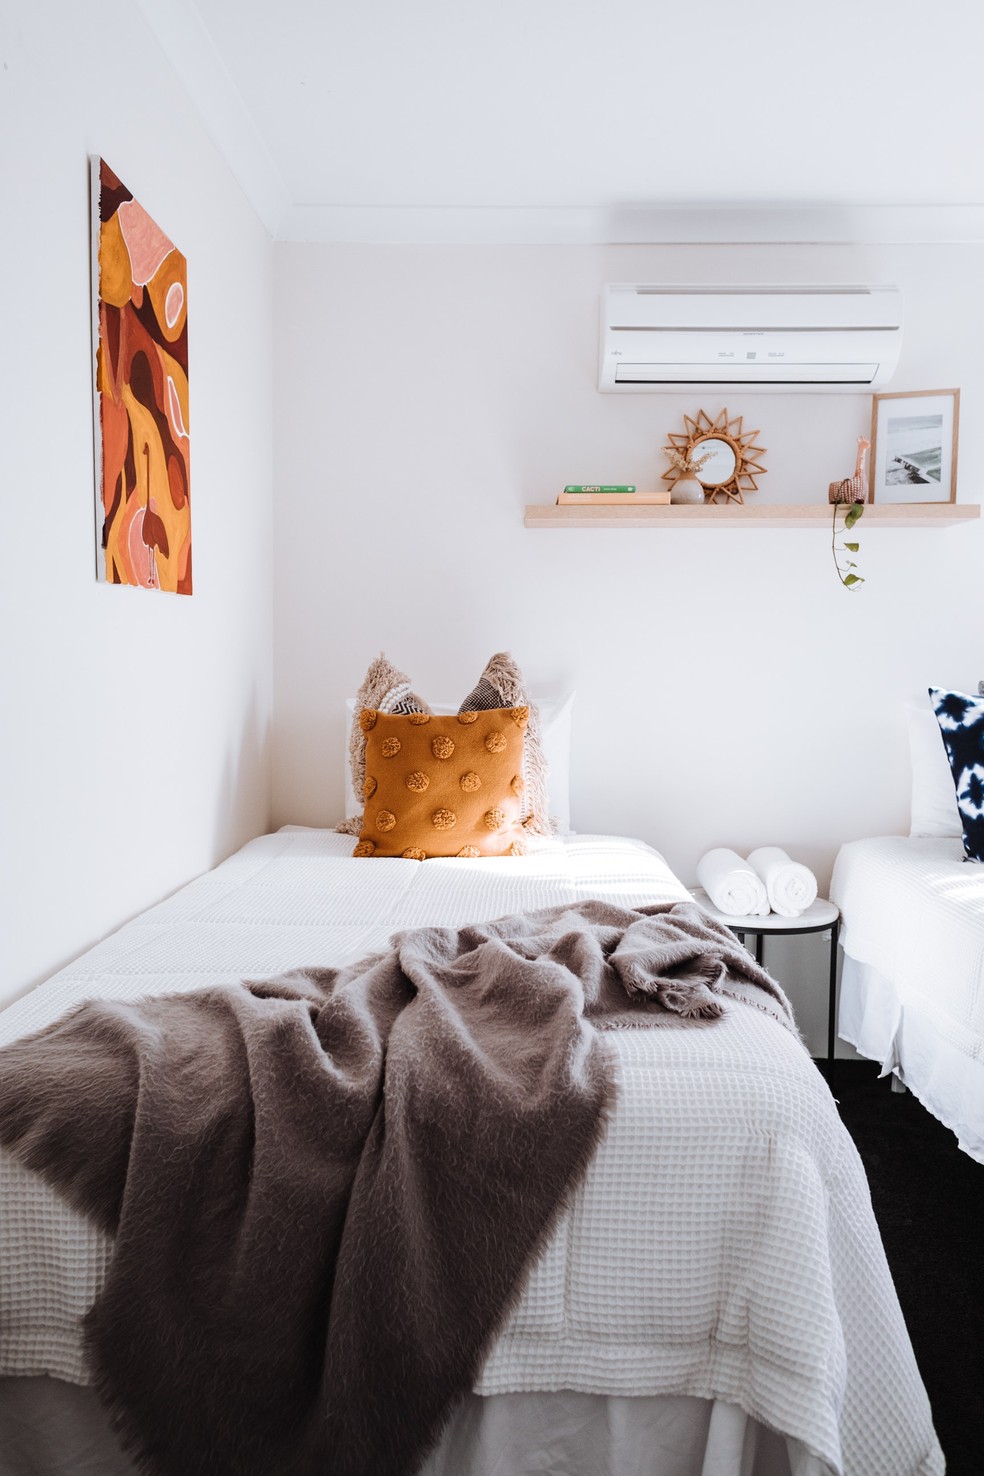 Filtro do ar condicionado deve ser limpo regularmente — Foto: Rachel Claire/Pexels